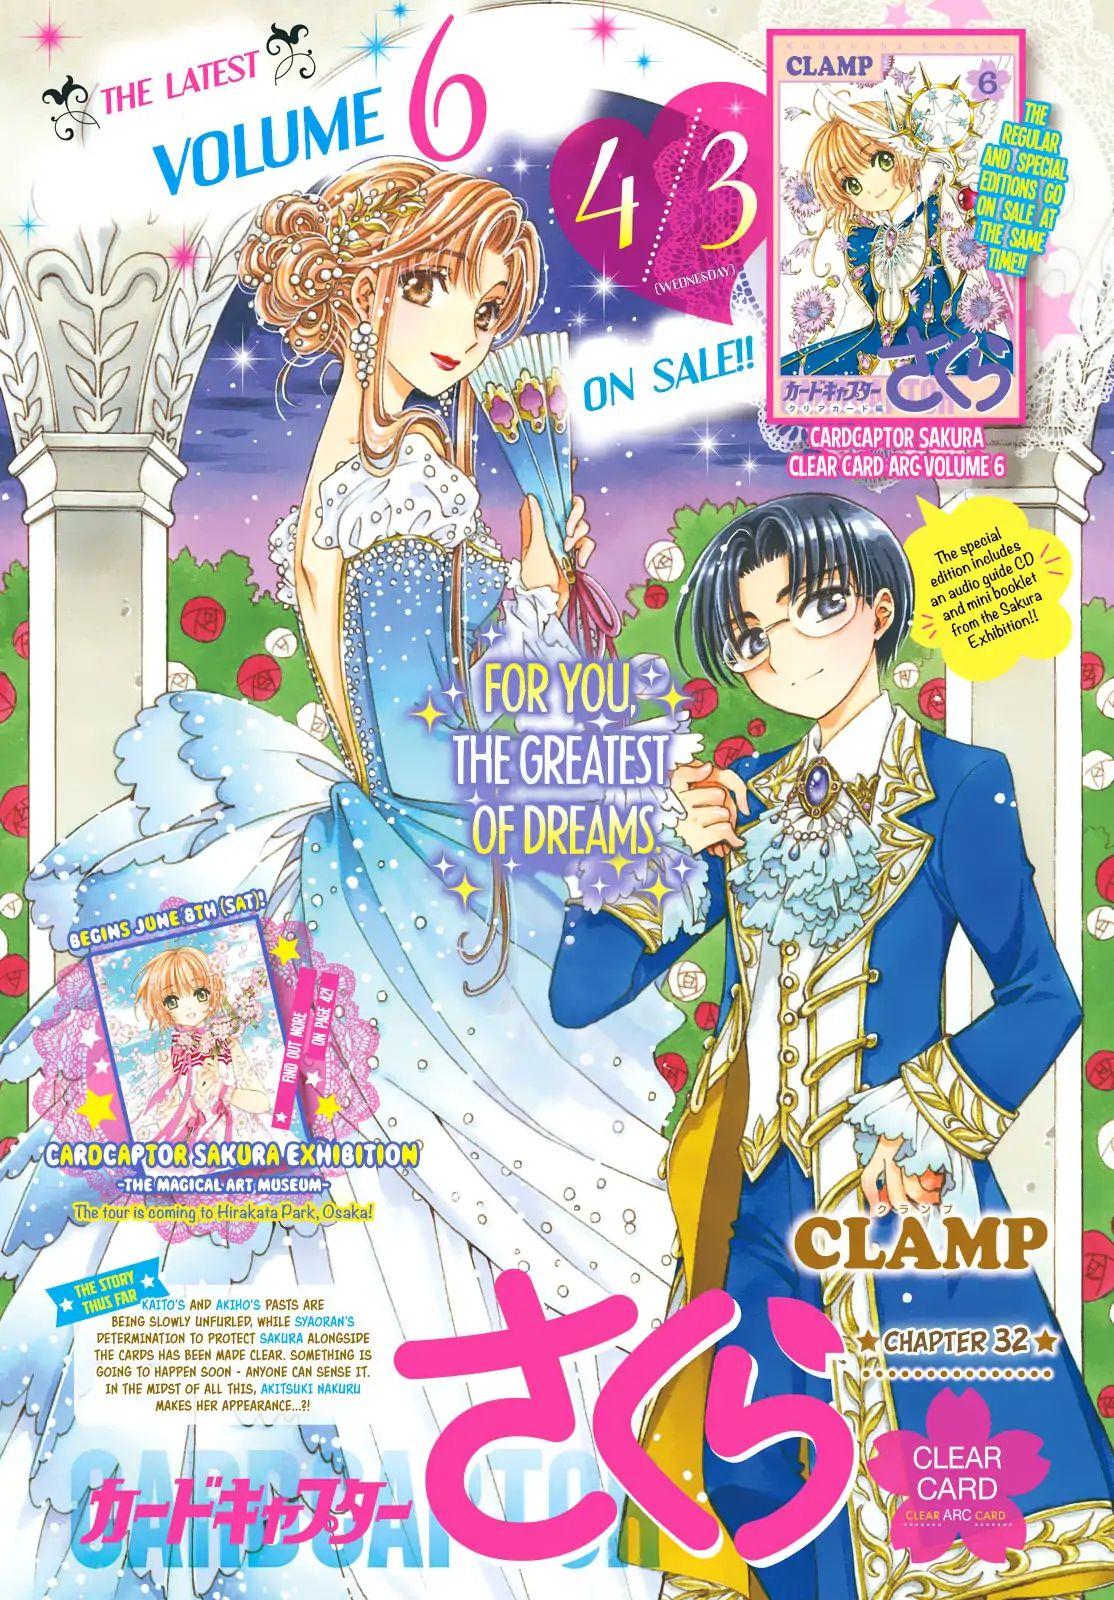 Cardcaptor Sakura: Clear Card Manga Ends in 14th Volume